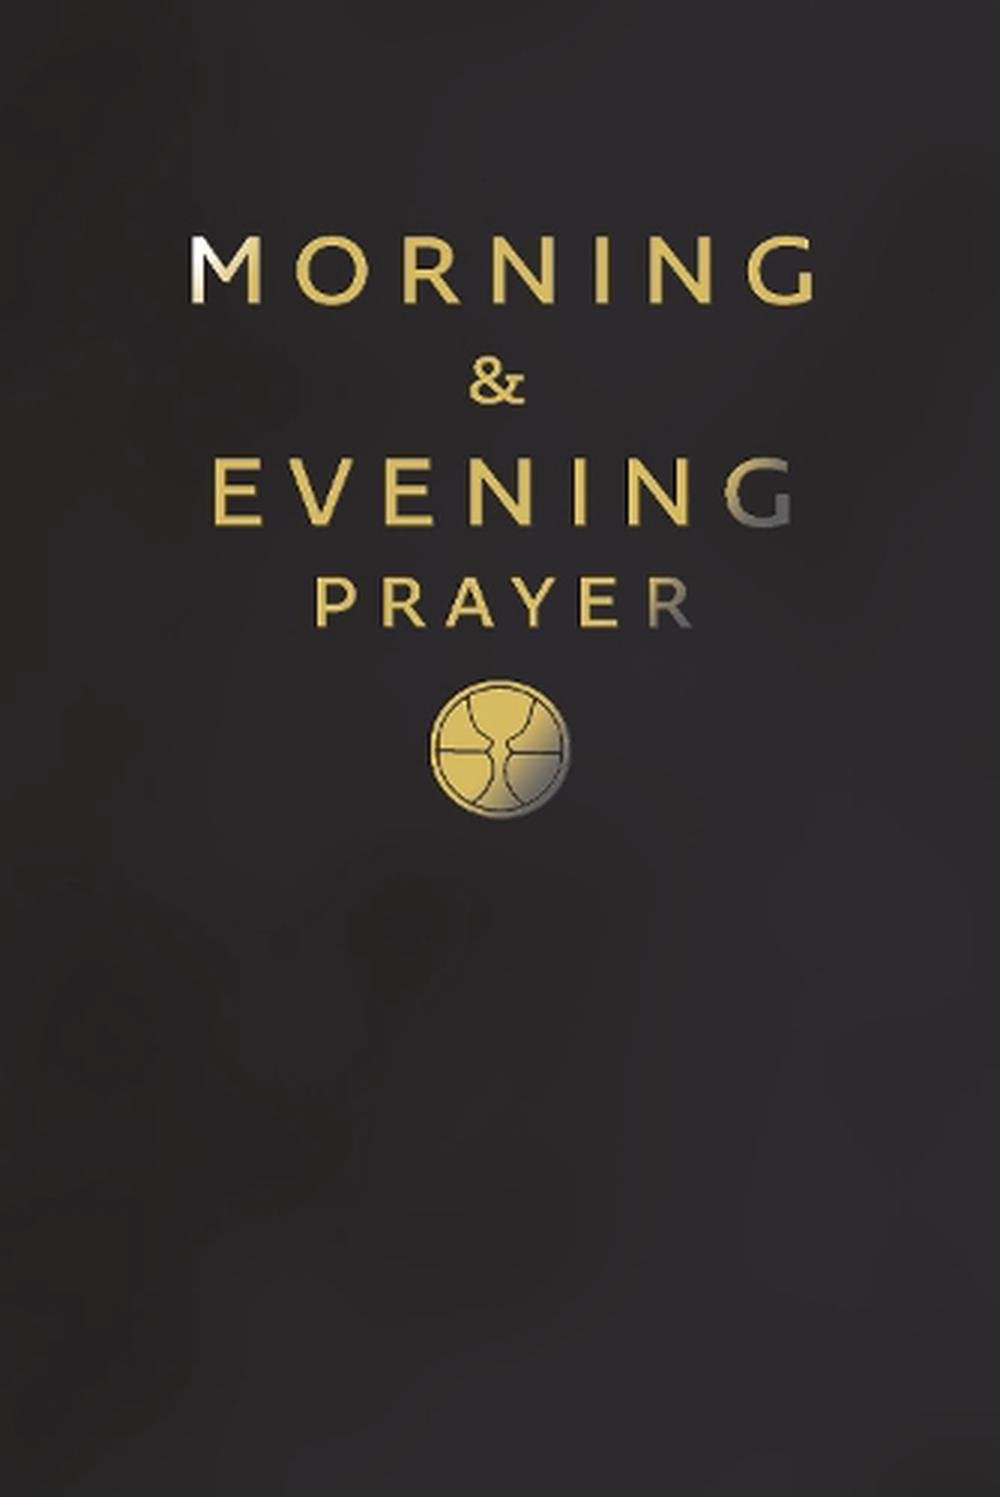 divine office morning prayer audio